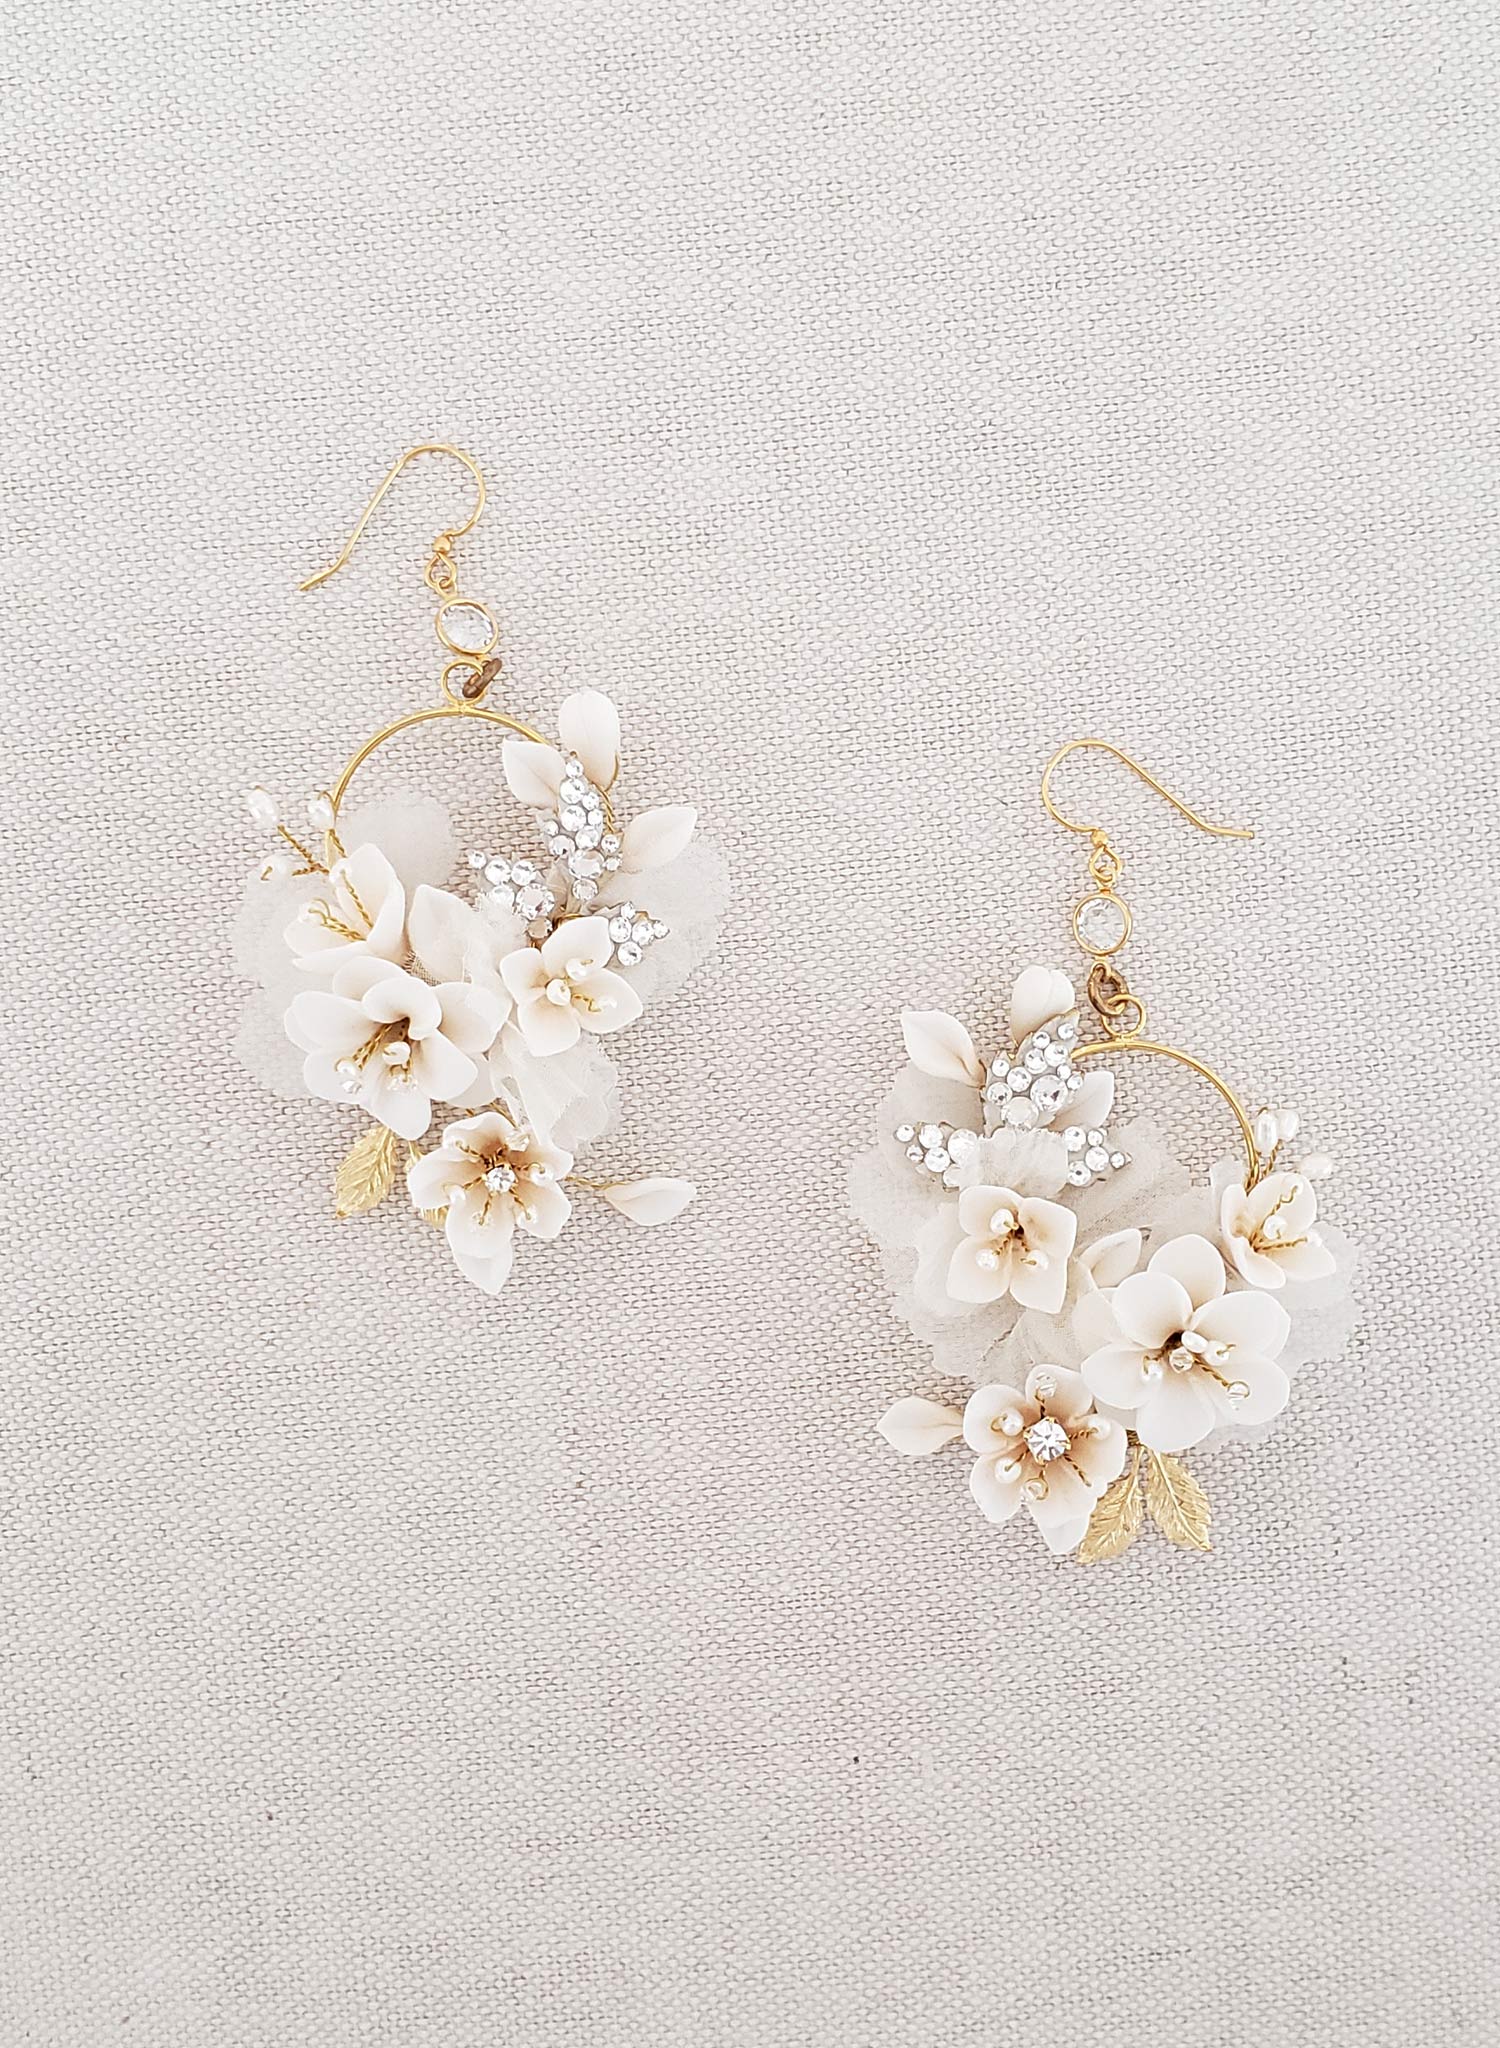 Real Flower Earrings Wedding Flower Earrings Funeral Flowers 